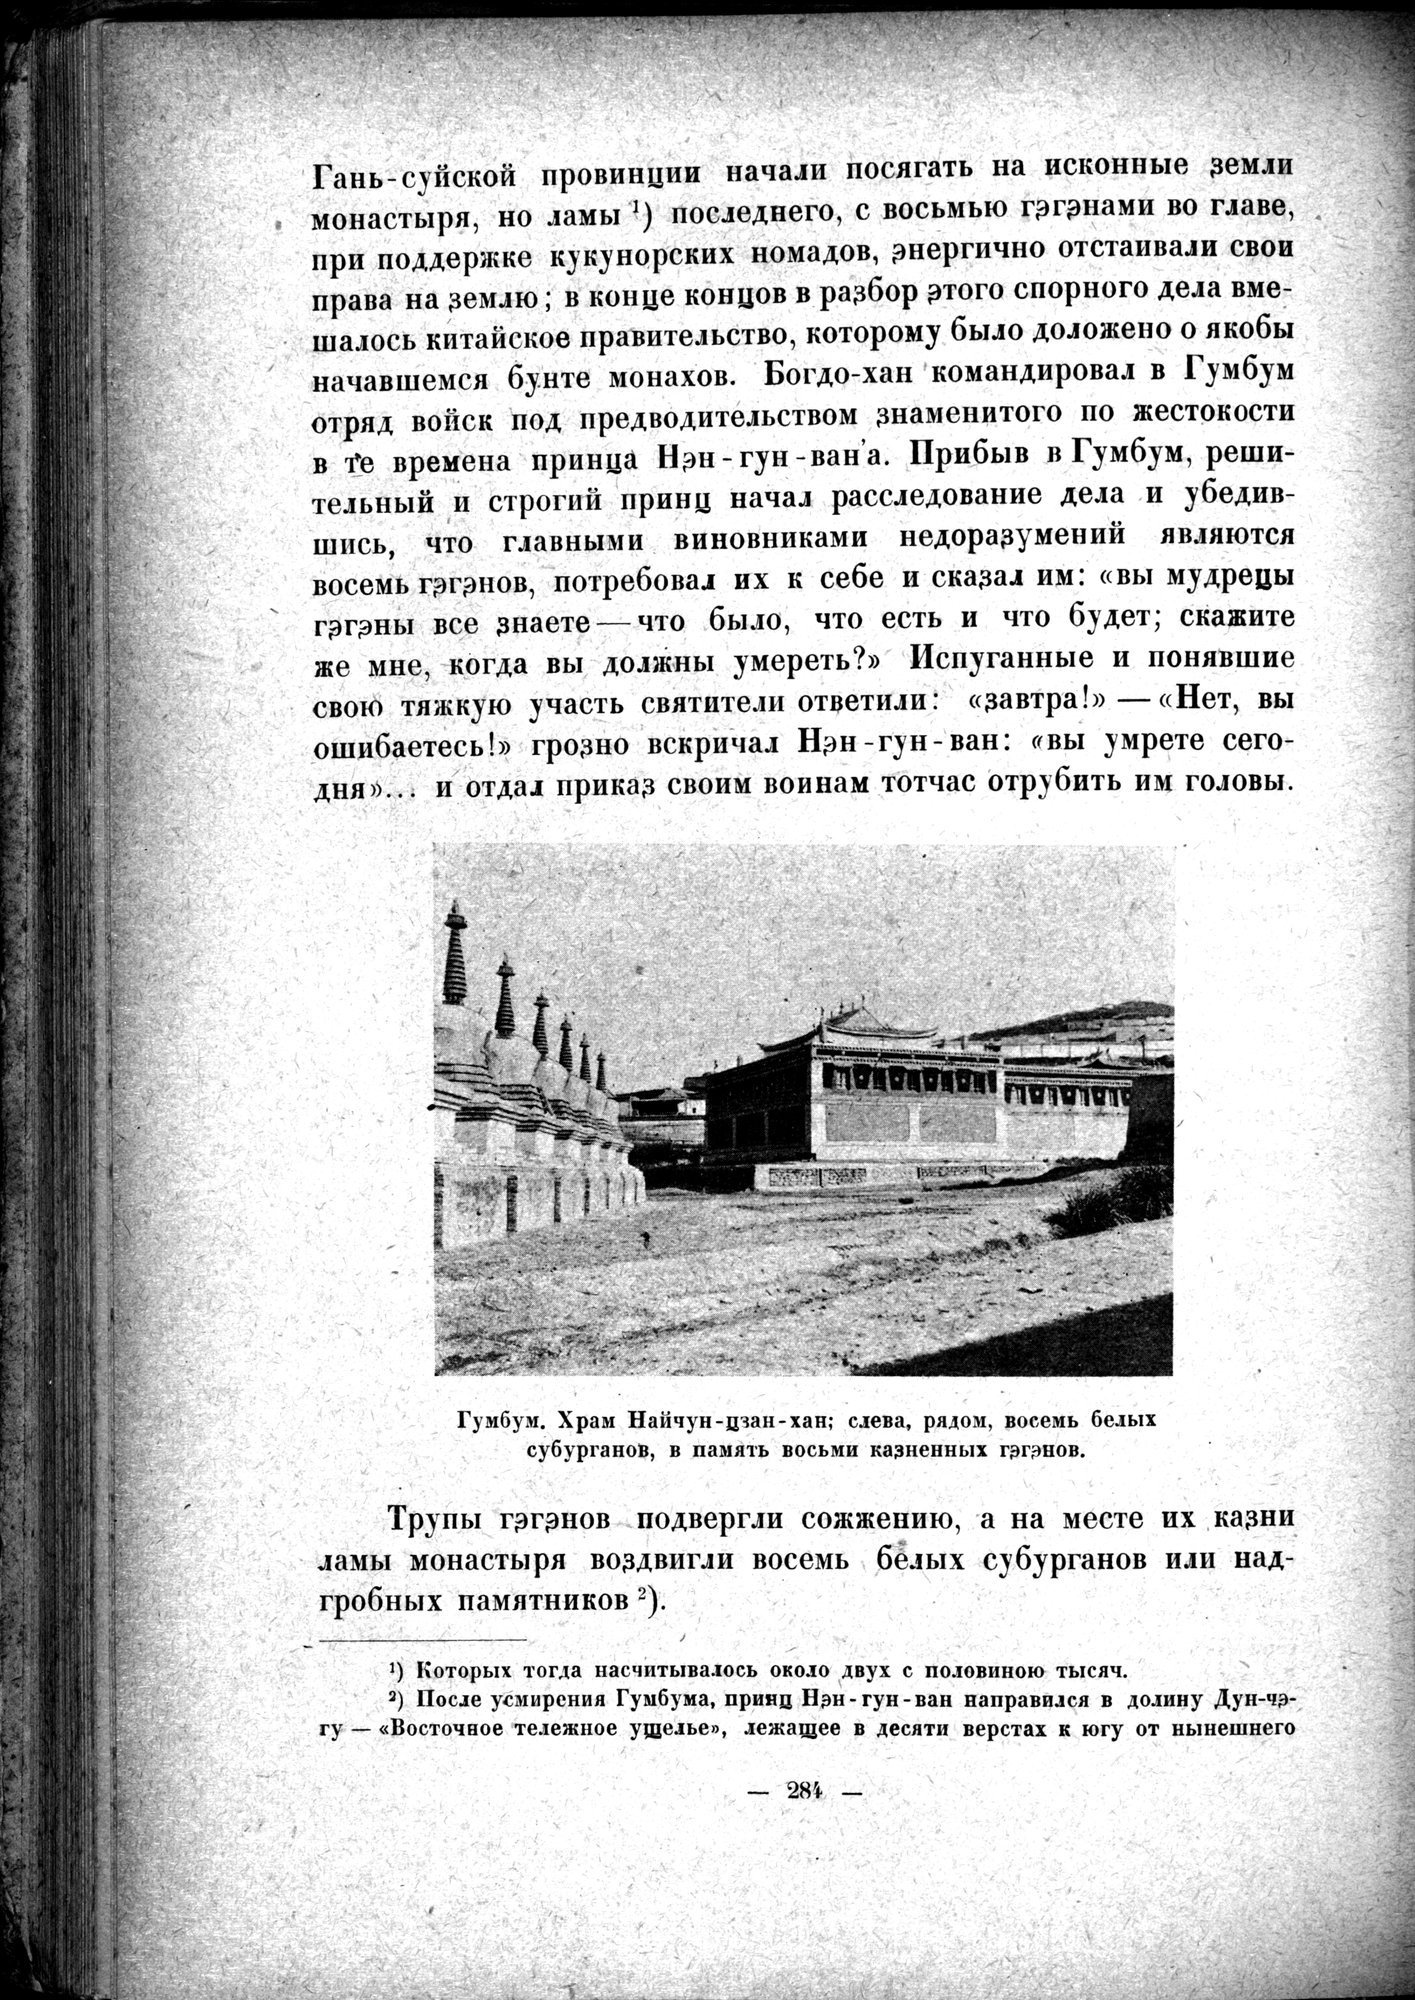 Mongoliya i Amdo i mertby gorod Khara-Khoto : vol.1 / Page 334 (Grayscale High Resolution Image)